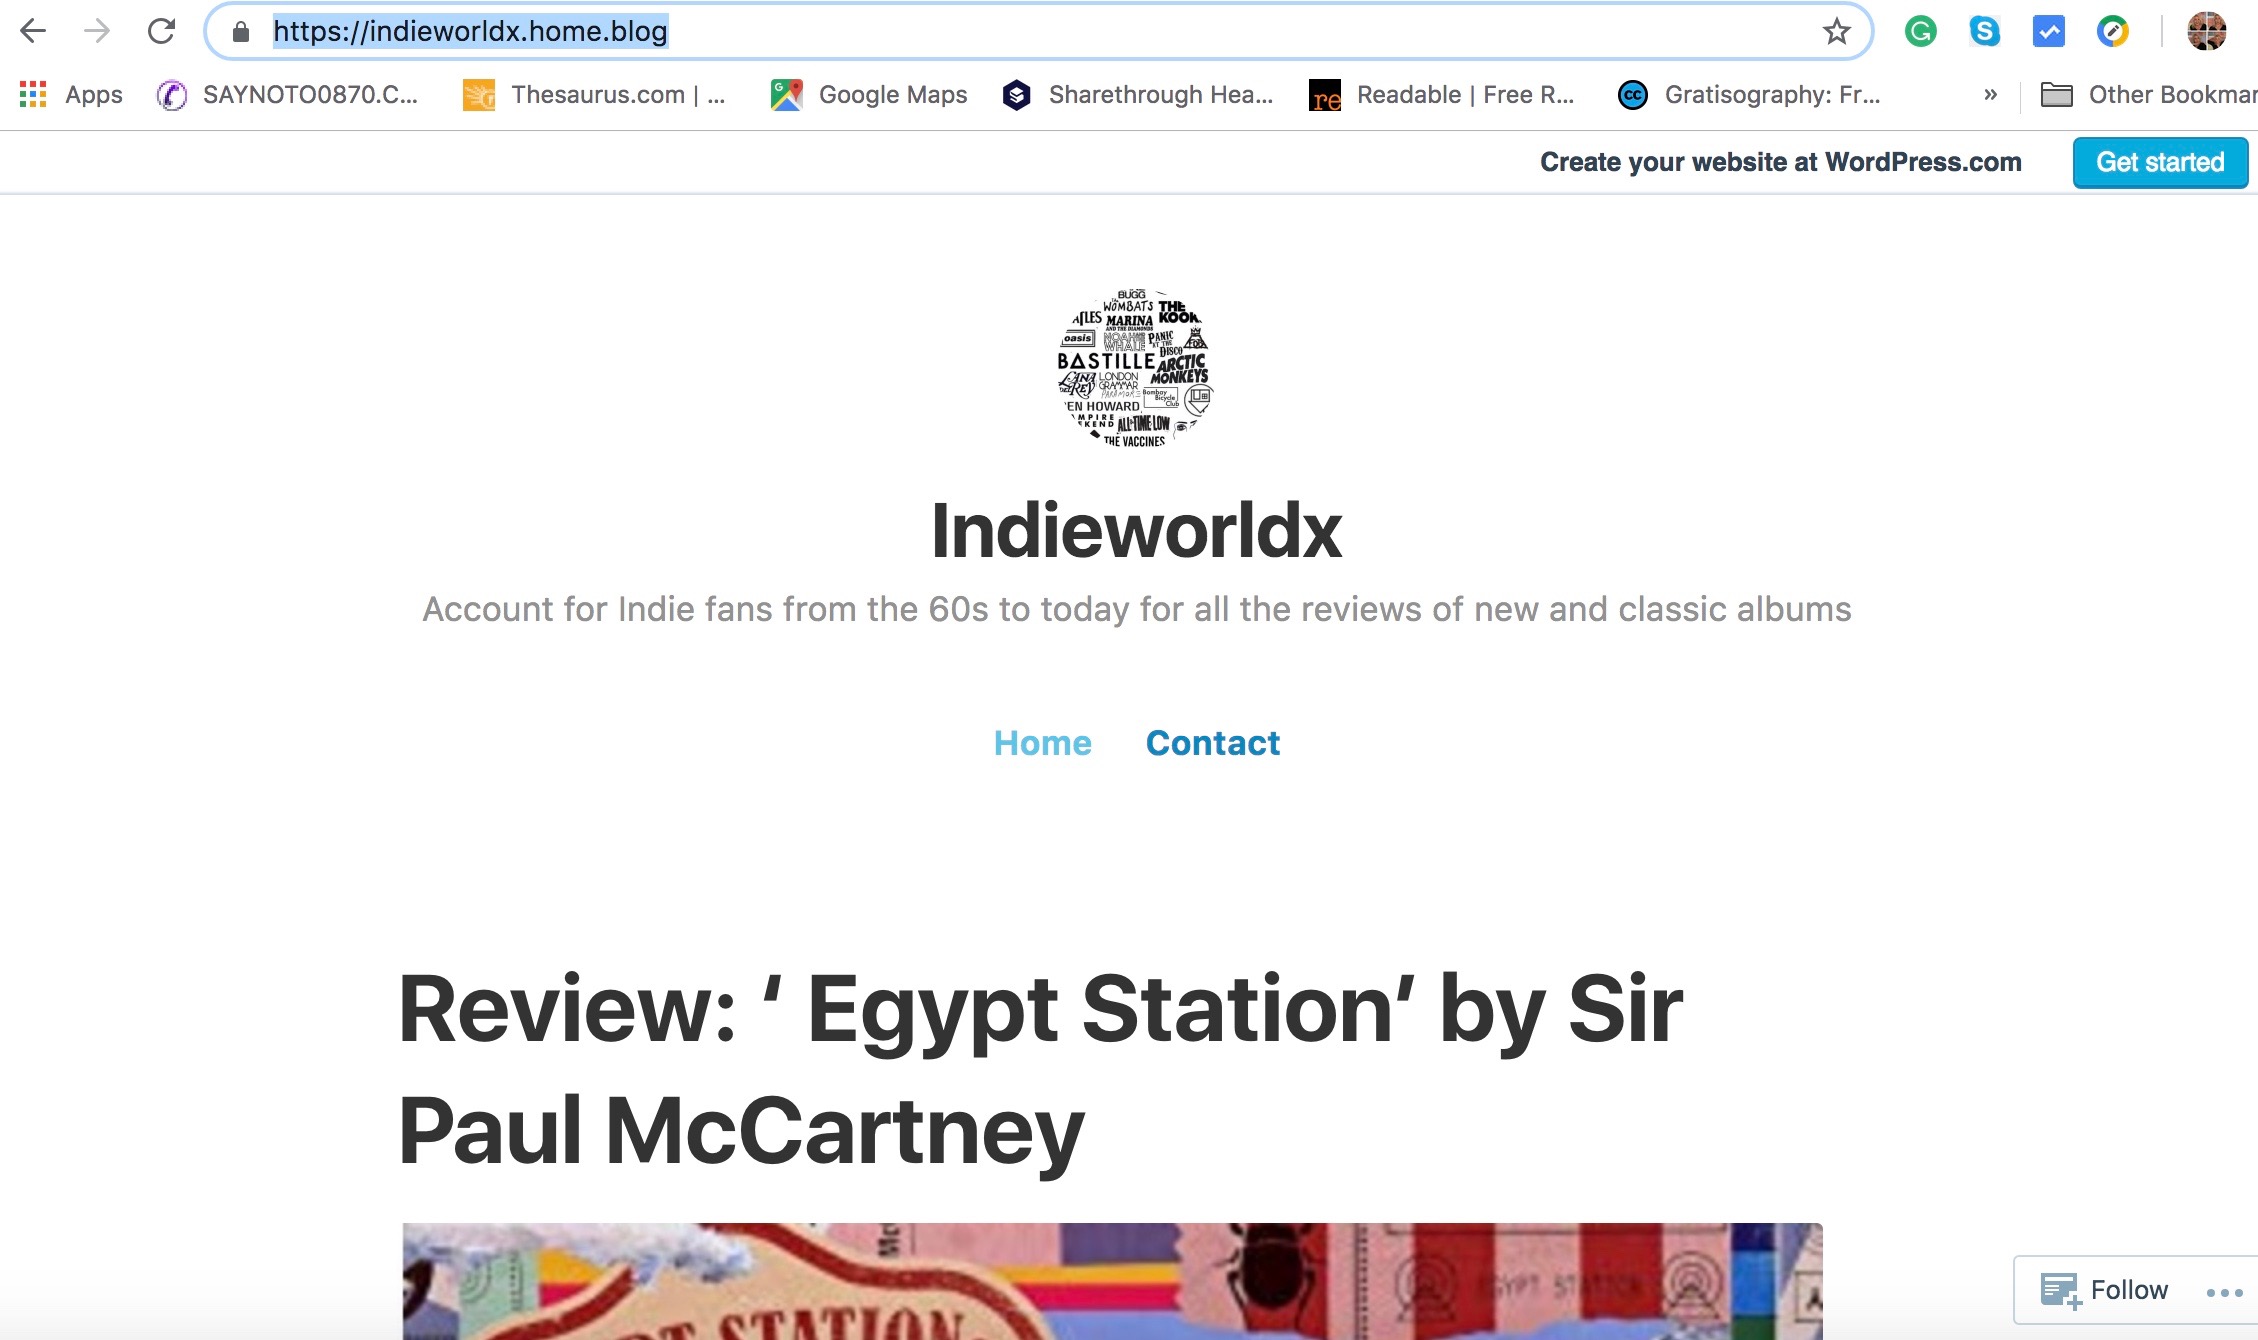 alt="screenshot of Indieworldx Blog Home Page"